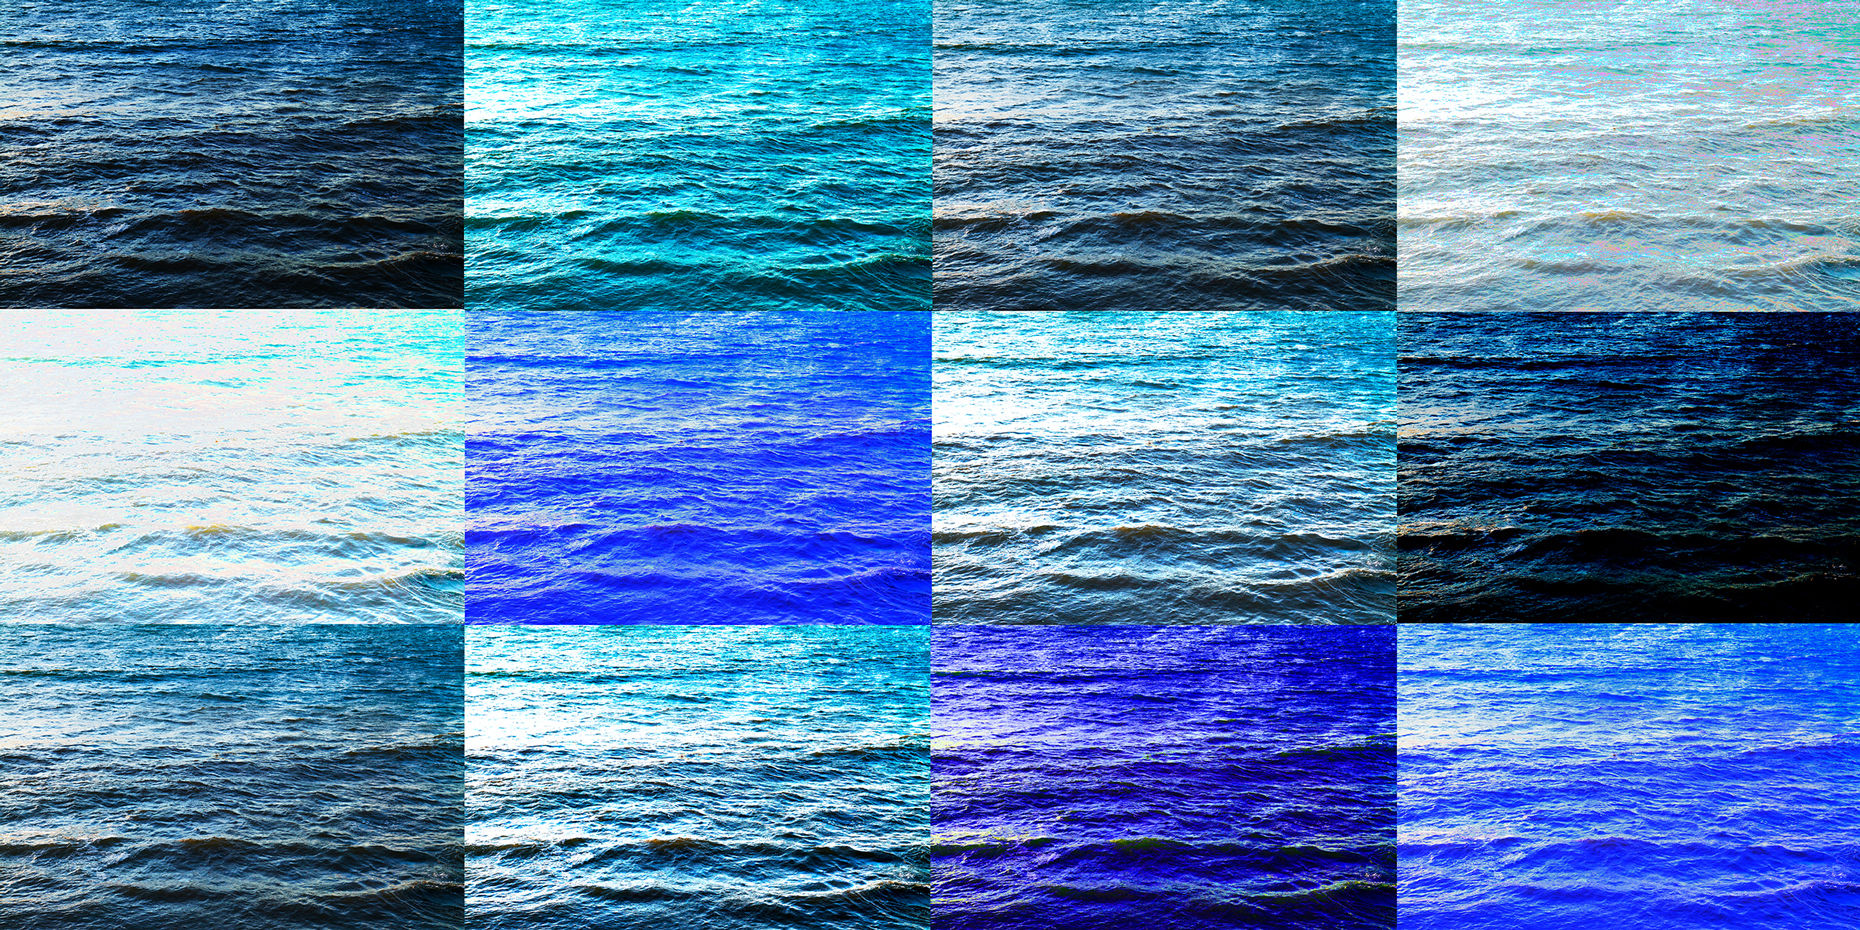 Waves-work-II